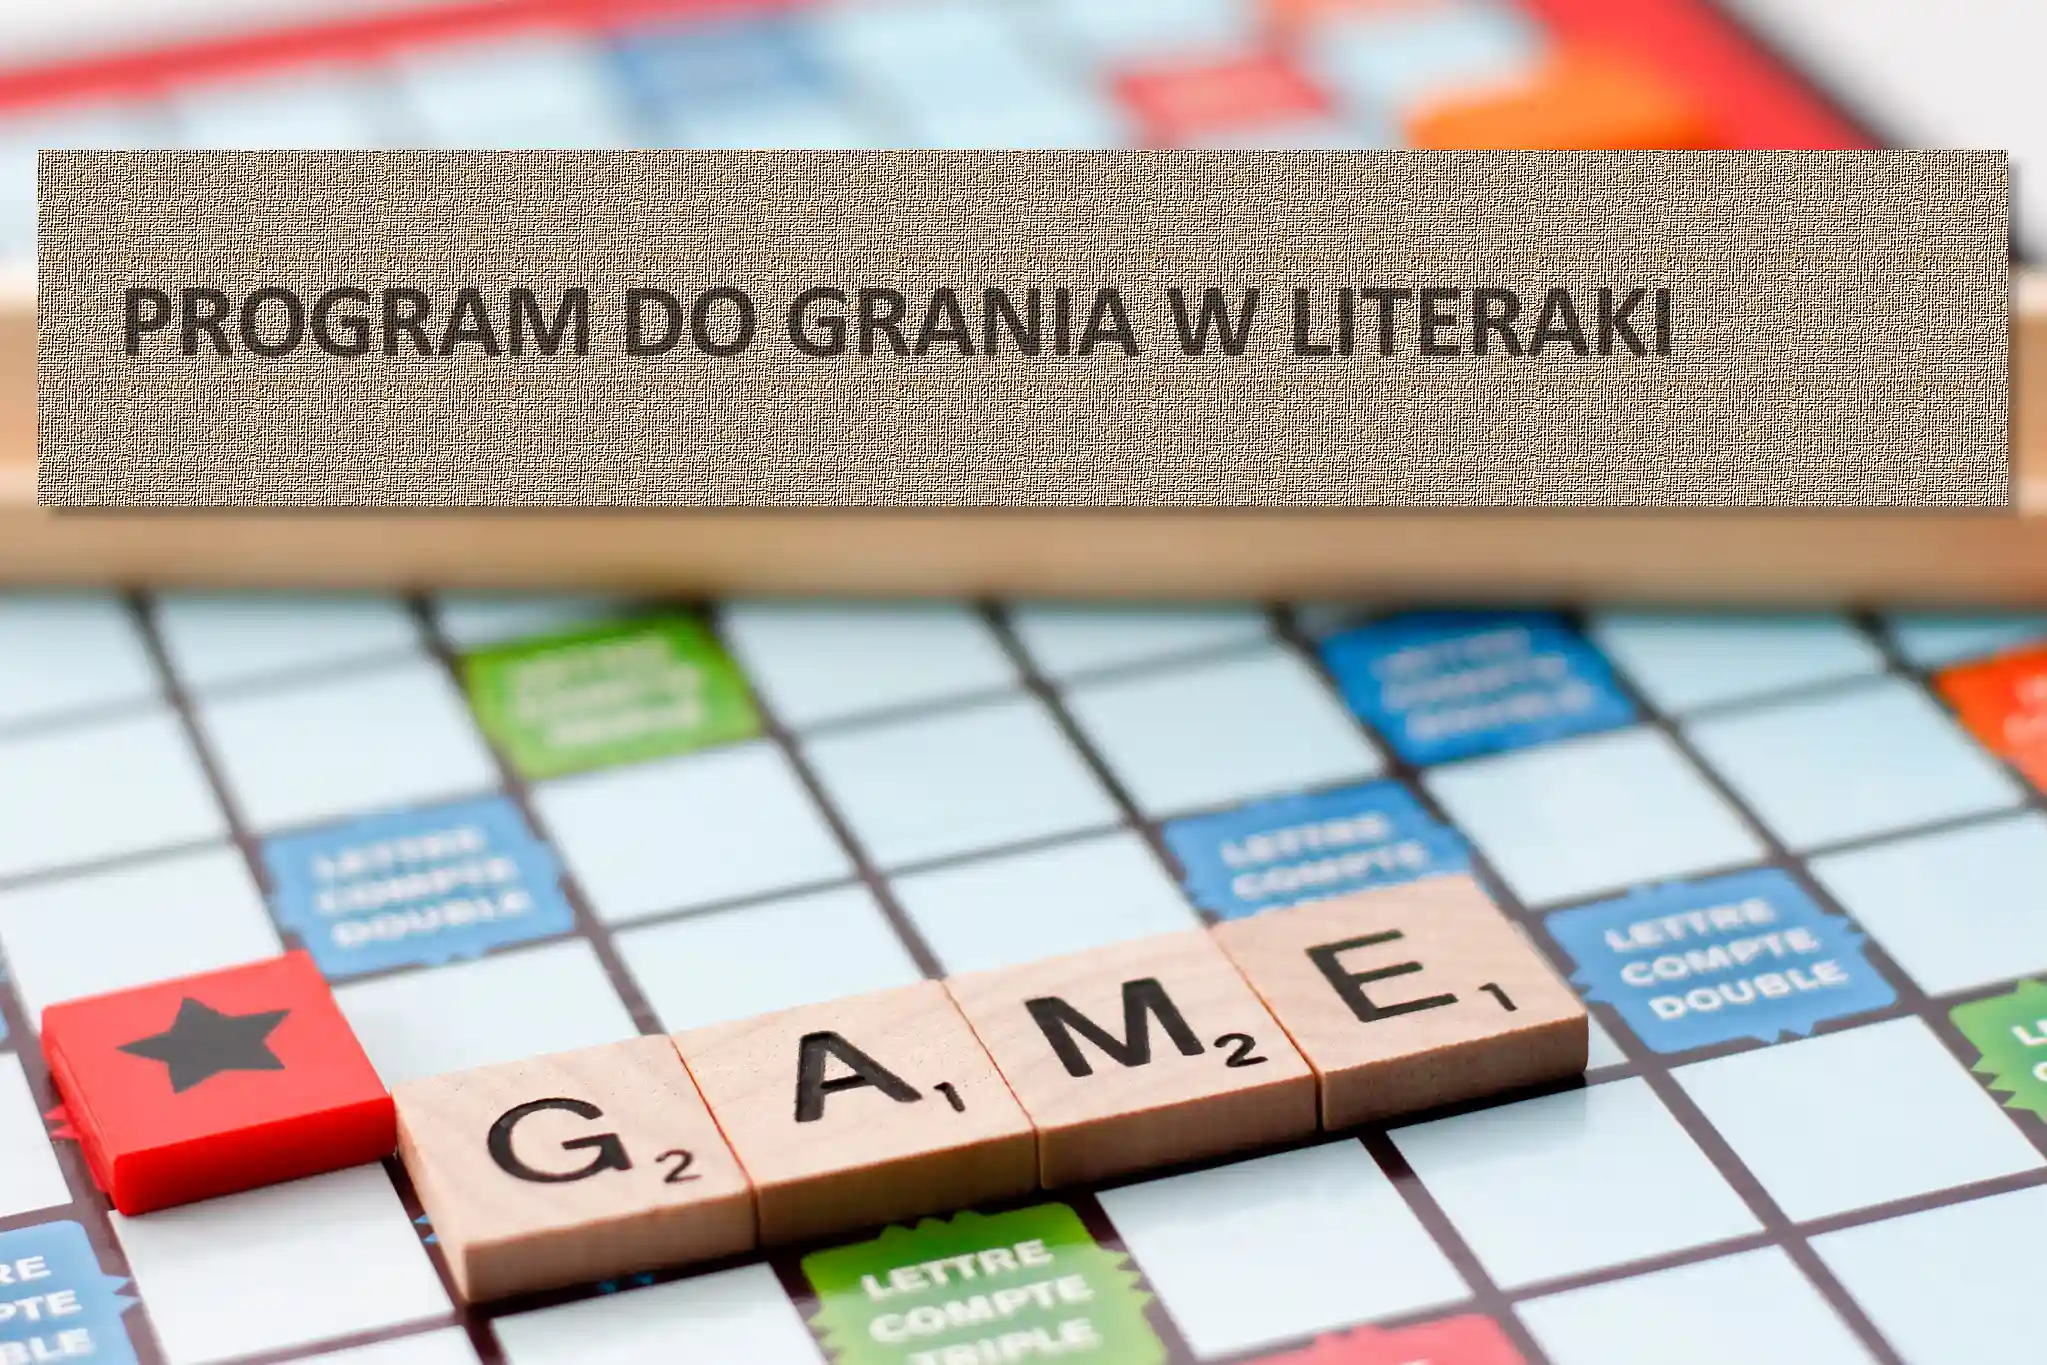 Slowa Z Liter Program Do Grania W Literaki Slownik Scrabble